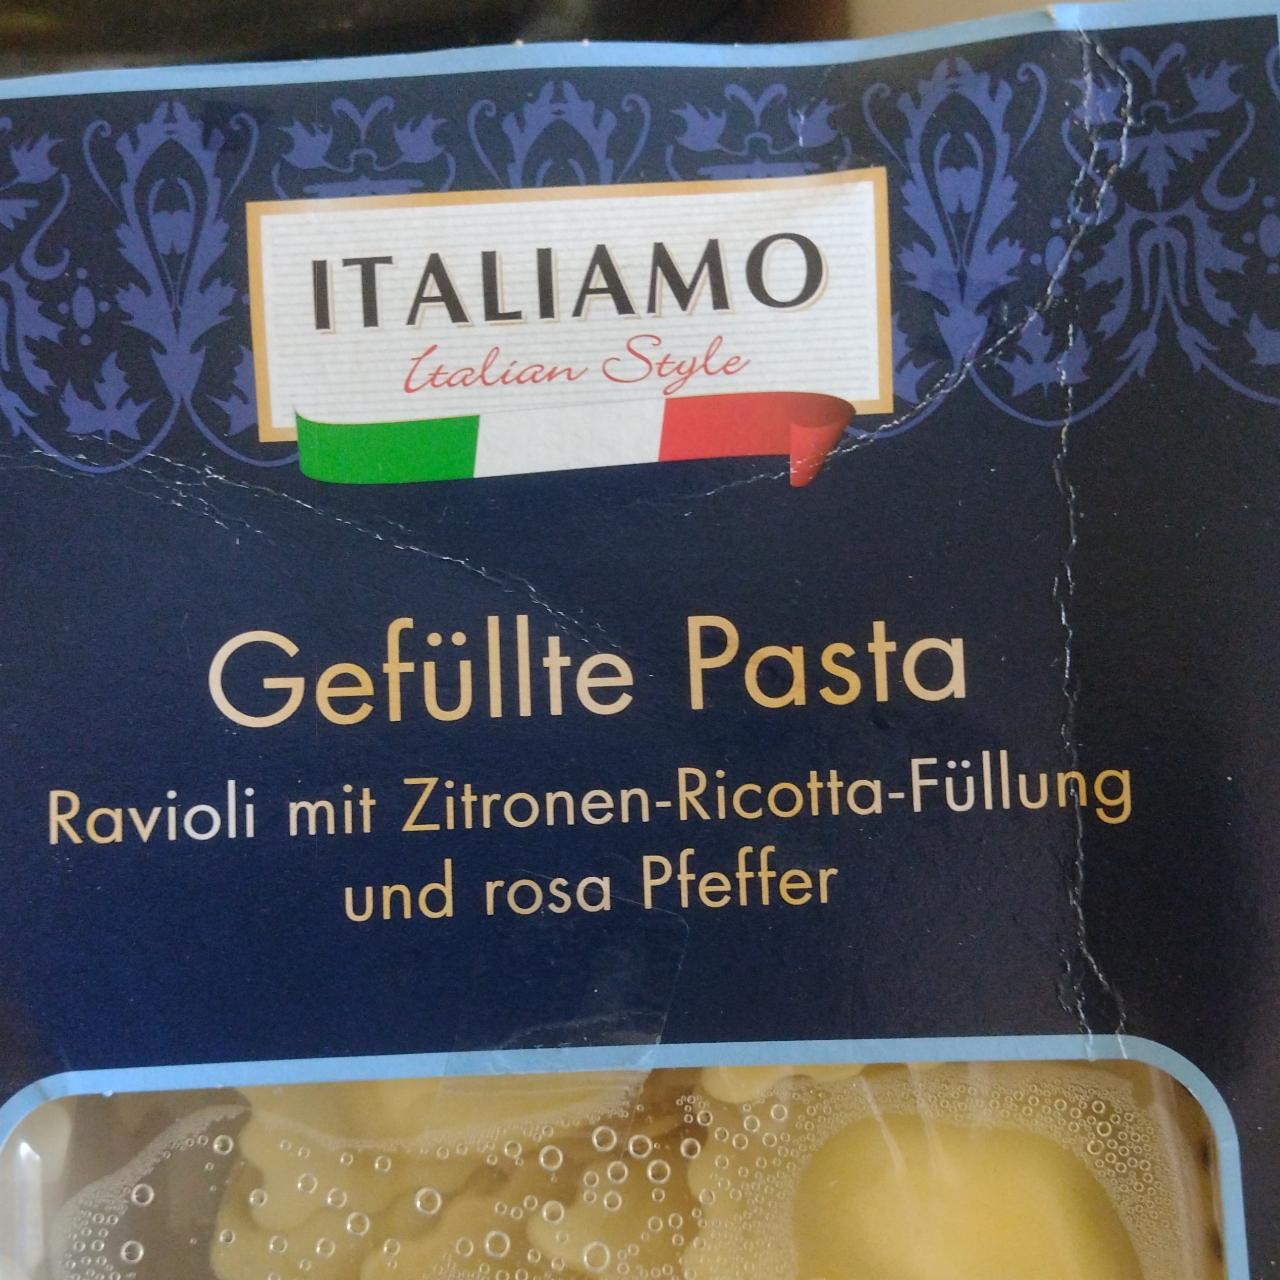 Pasta kalorie, rosa Pfeffer Ravioli a - kJ und mit Zitronen-Ricotta-Füllung nutriční Italiamo Gefüllte hodnoty